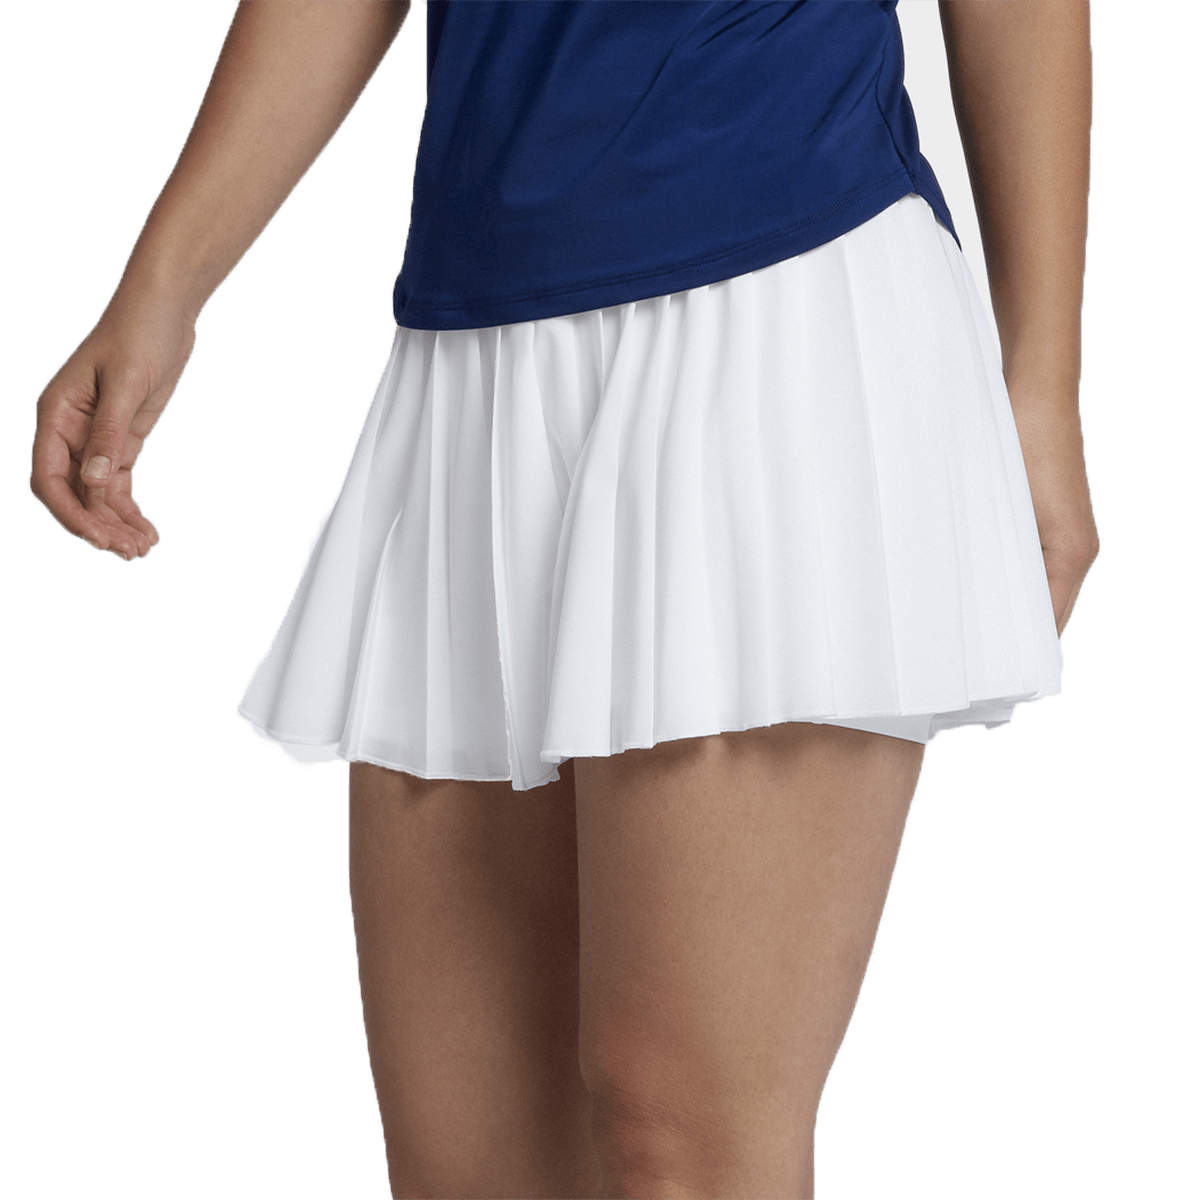 nike victory skirt white